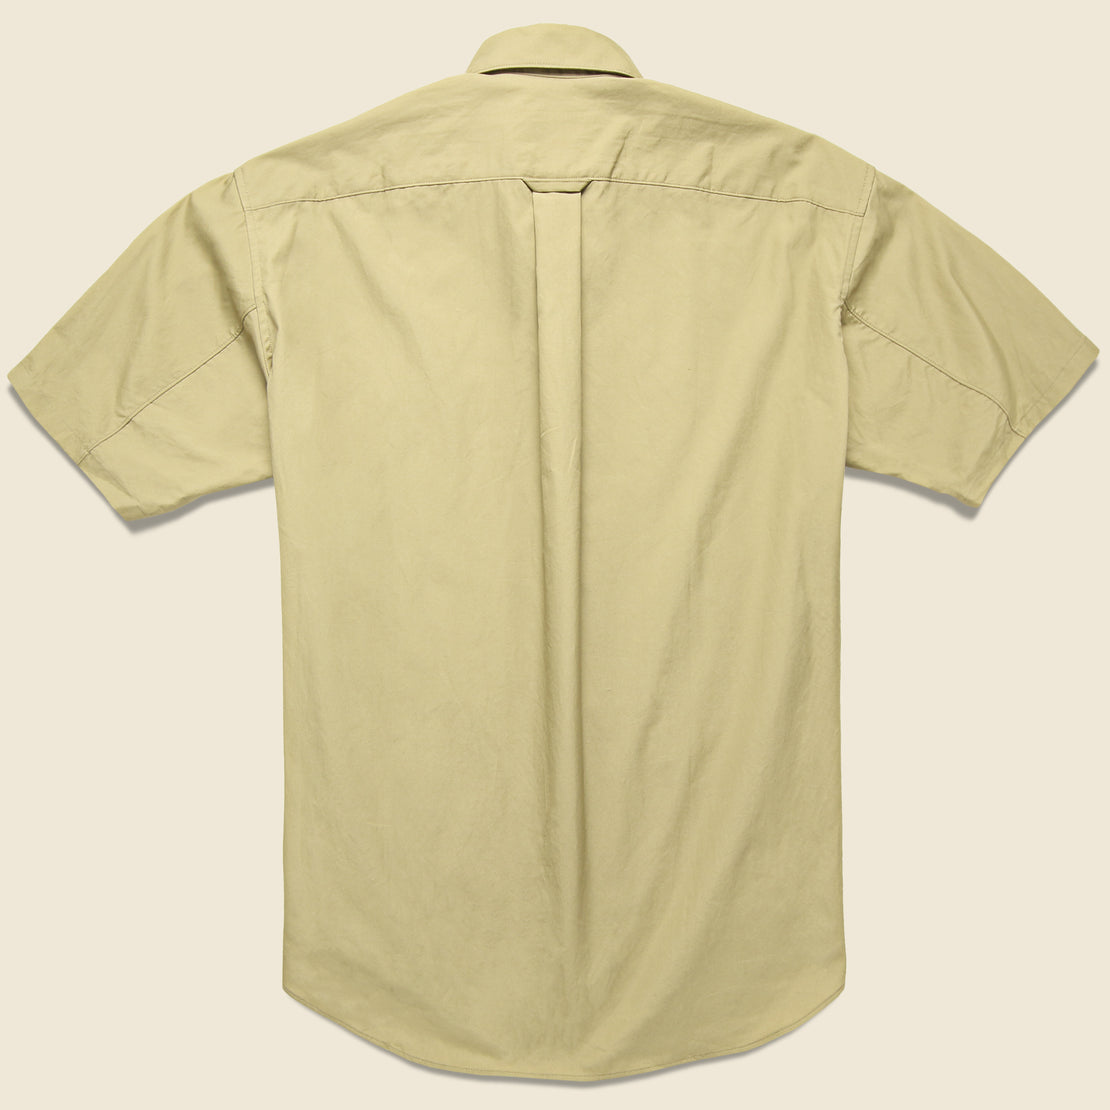 Paneled Shirt - Khaki/Olive/Navy - Monitaly - STAG Provisions - Tops - S/S Woven - Stripe